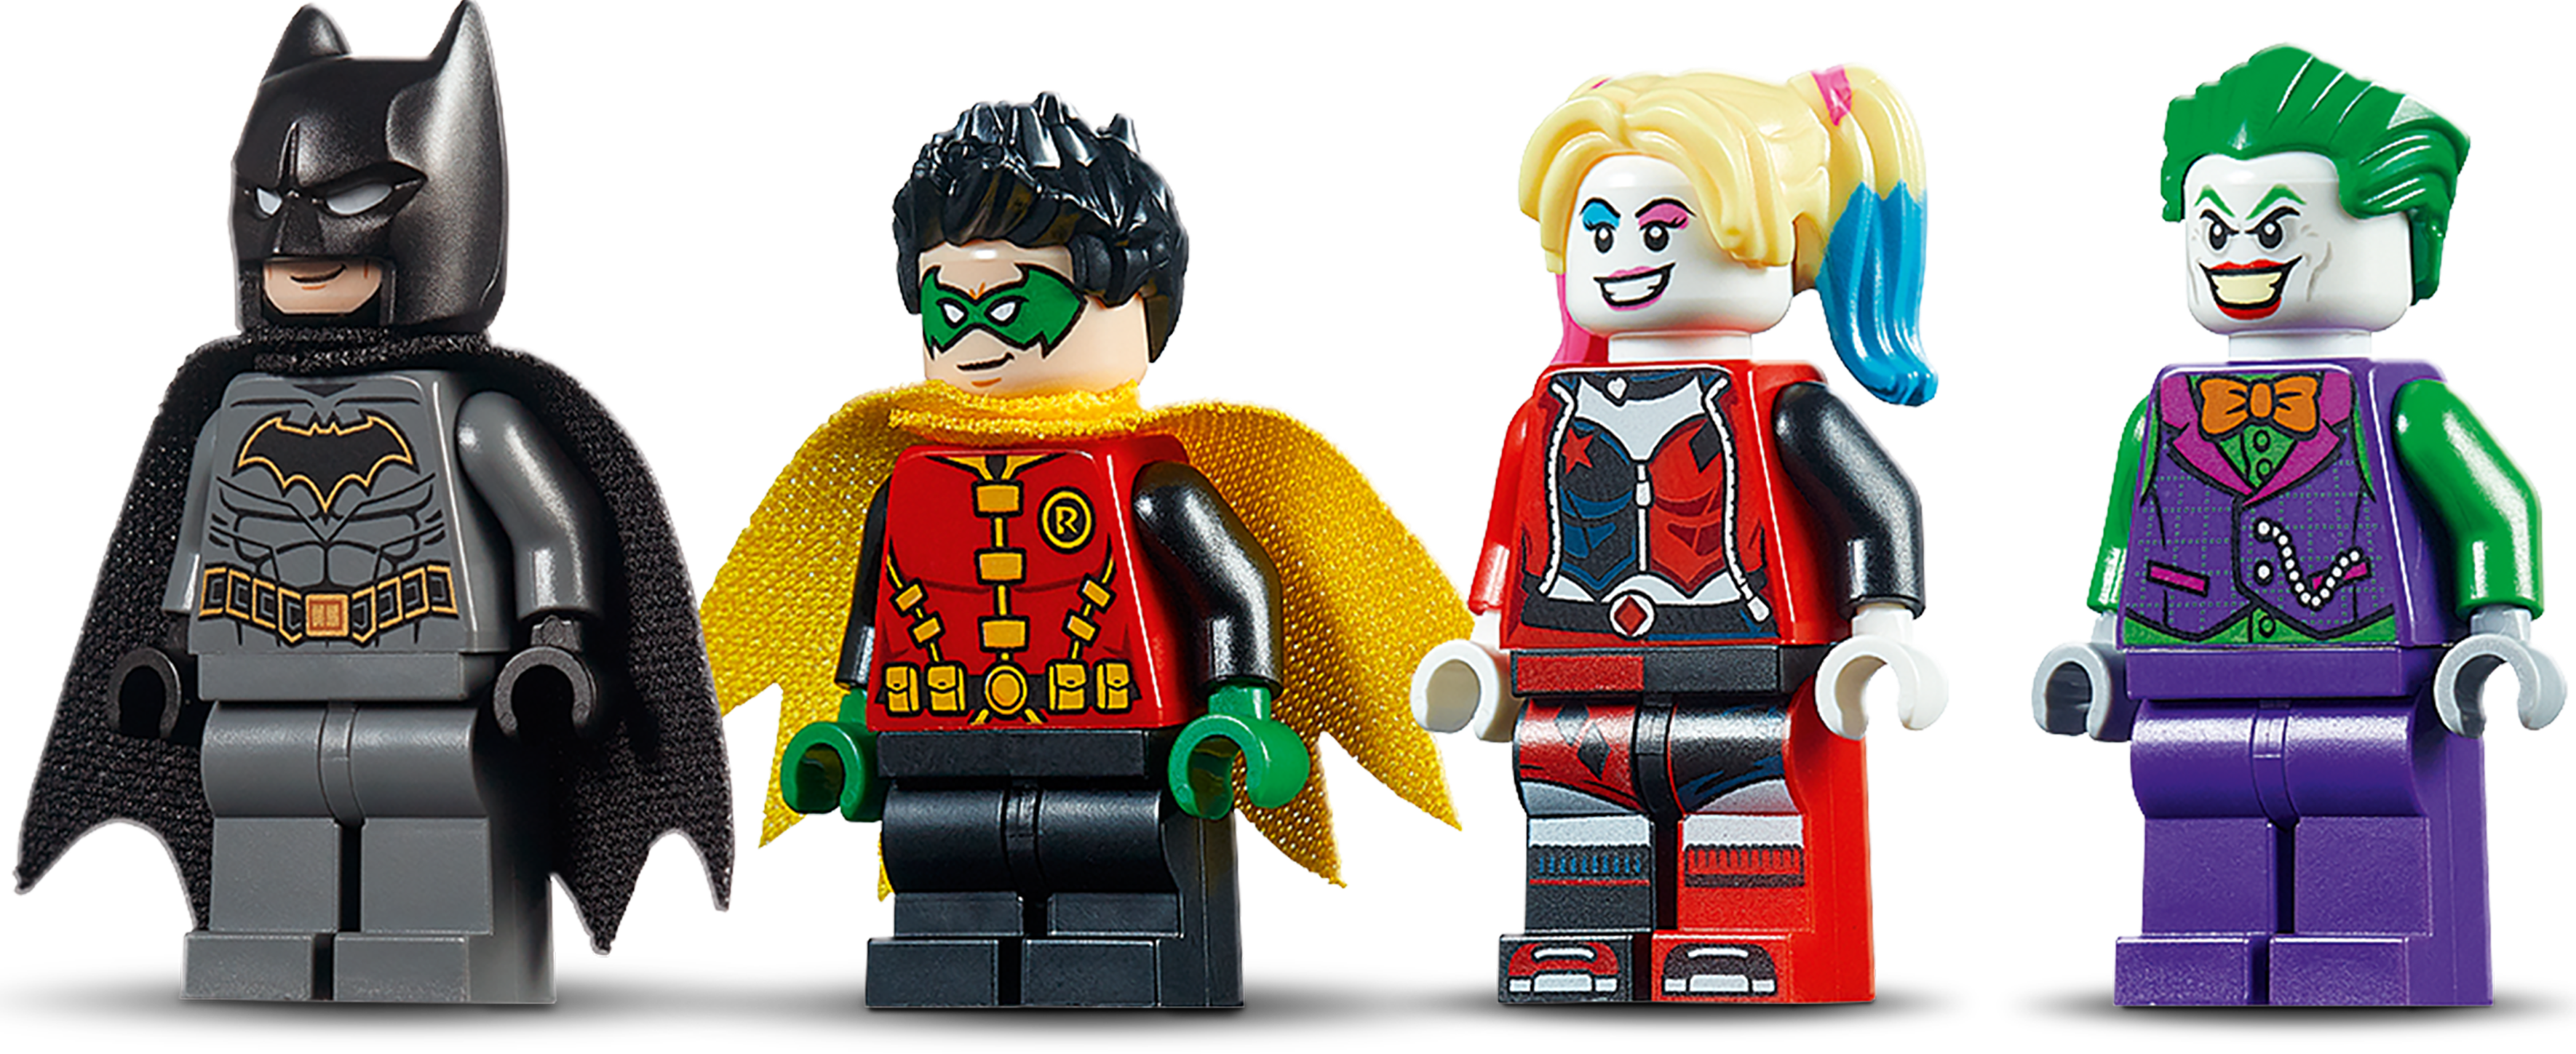 New Lego Batman 'Robin' Minifigure sh651 From Set 76159 